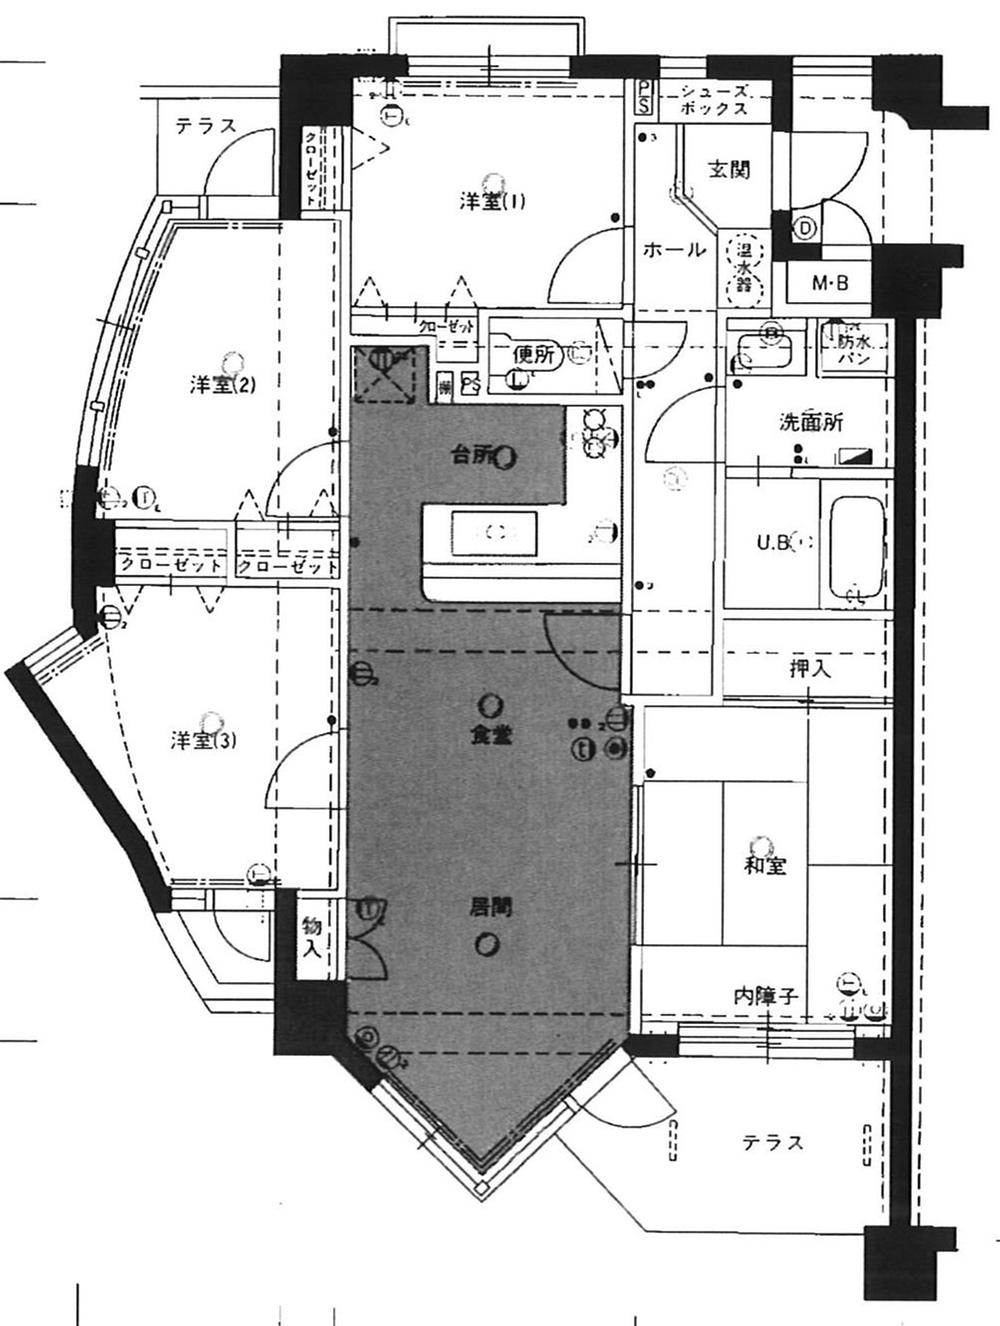 Floor plan. 4LDK, Price 18.5 million yen, Occupied area 88.39 sq m 88 sq m more than 4LDK (surprise! )